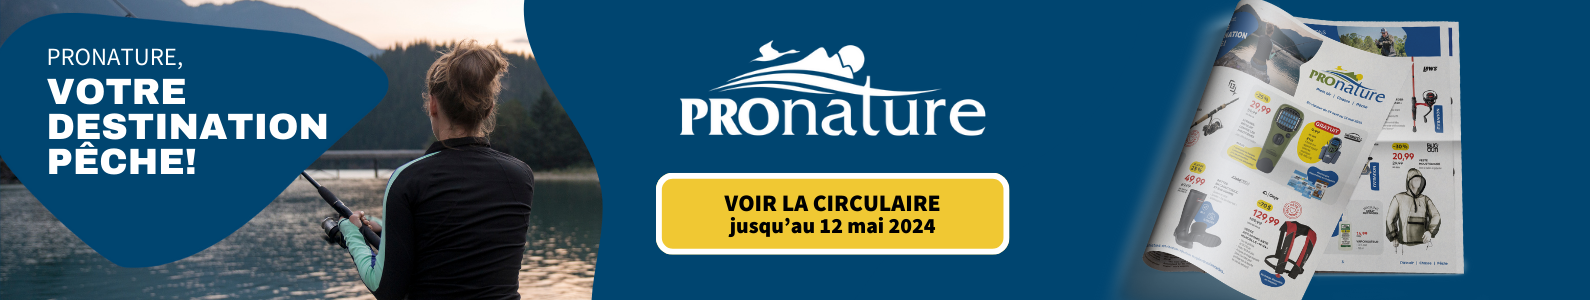 Pro Nature circulaire 29 avril 2024